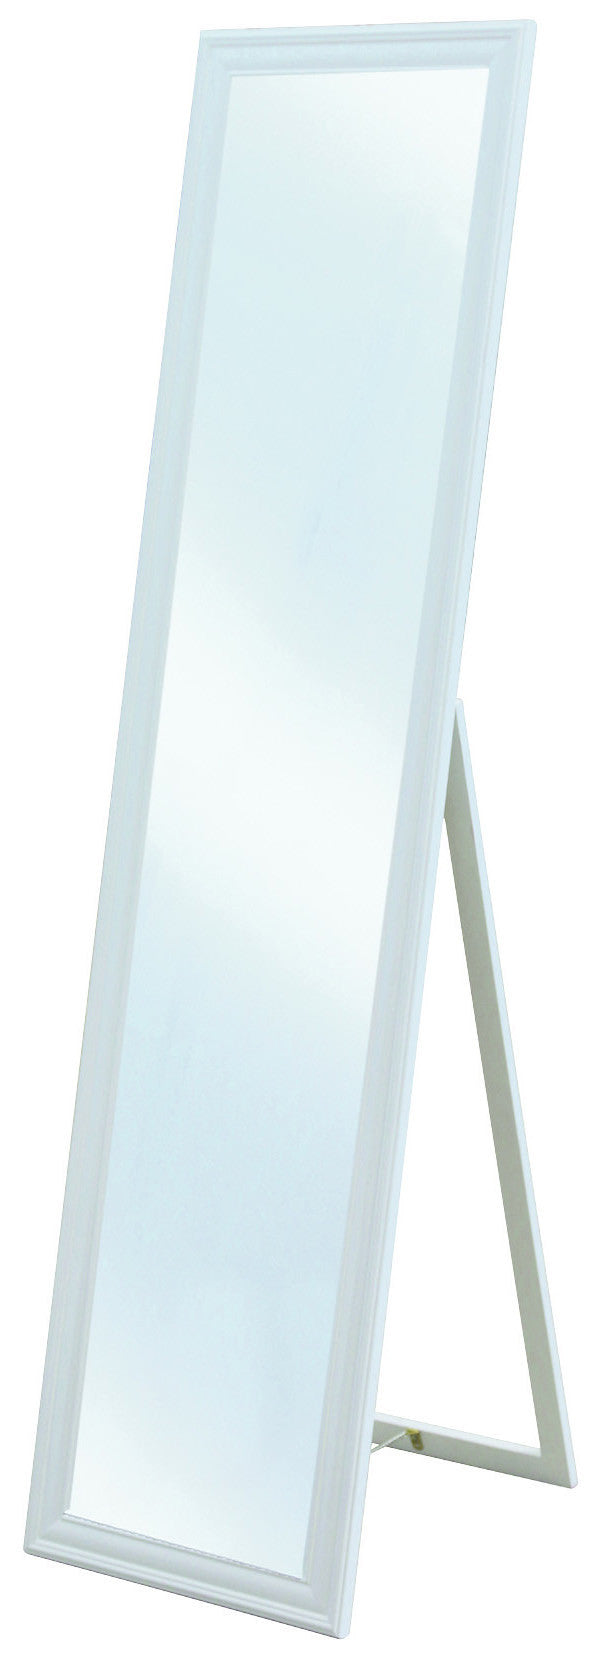 Specchio a pavimento cm.40x160 bianco